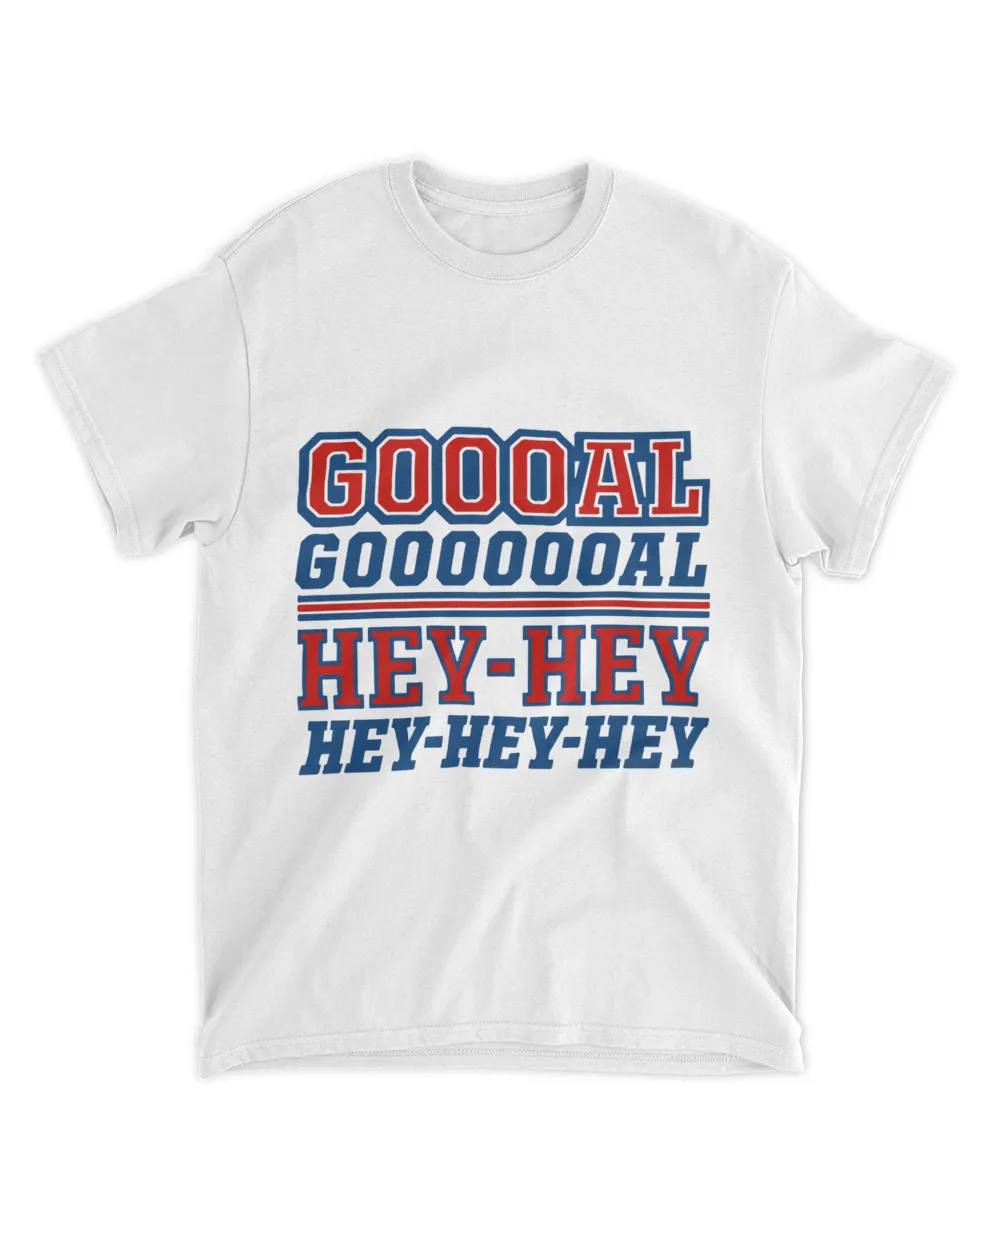 New York Goal! Hey Hey Hey Hey Hey Shirt